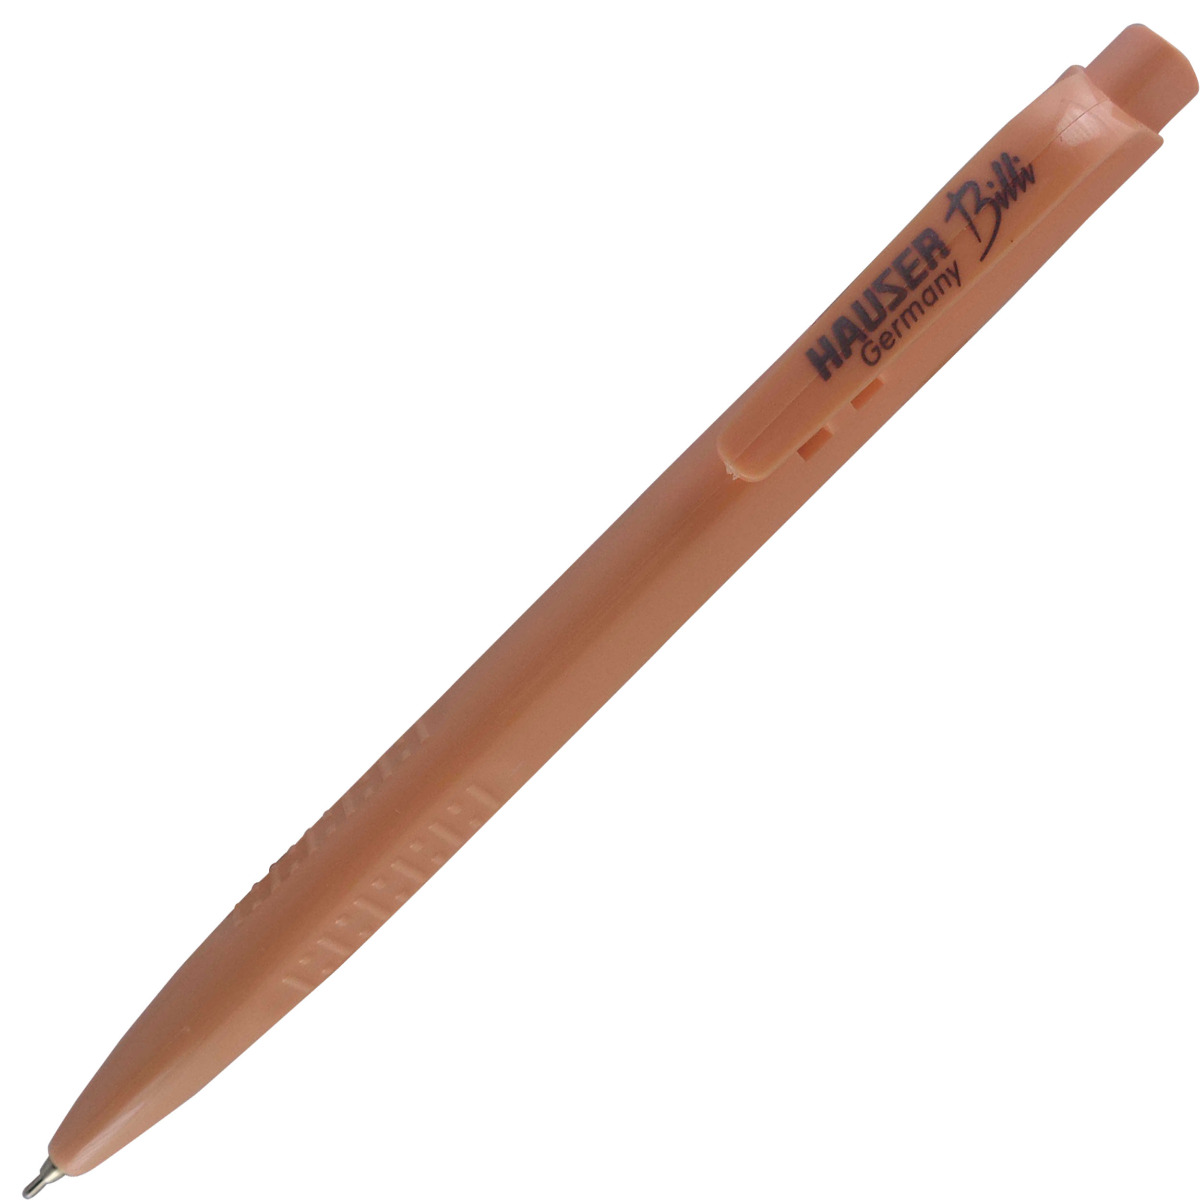 Hauser Billi Model: 13624 Pale orange color body with Blue ink fine Tip Rectractable ball pen